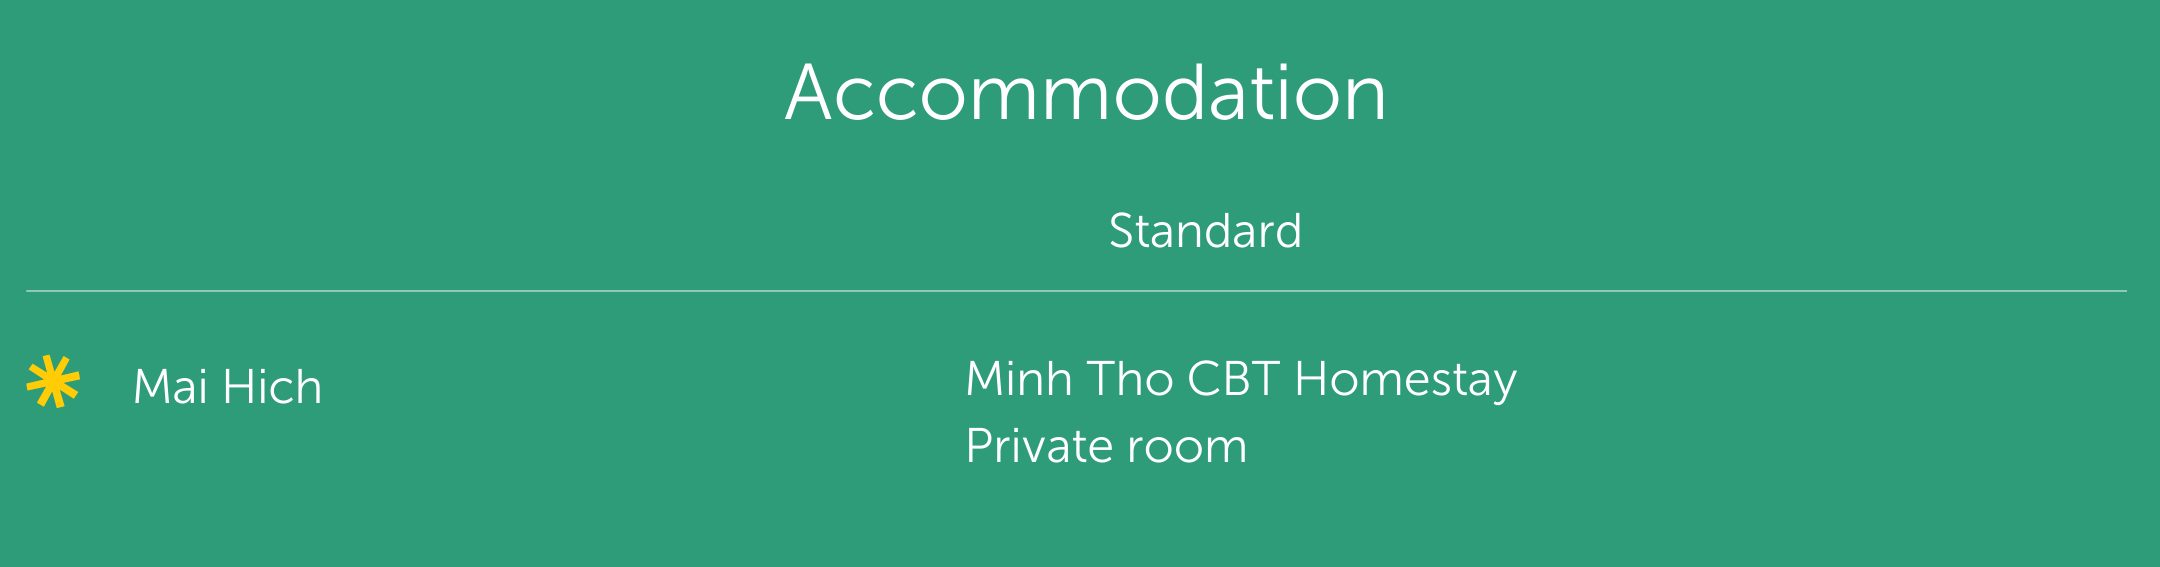 accommodation list